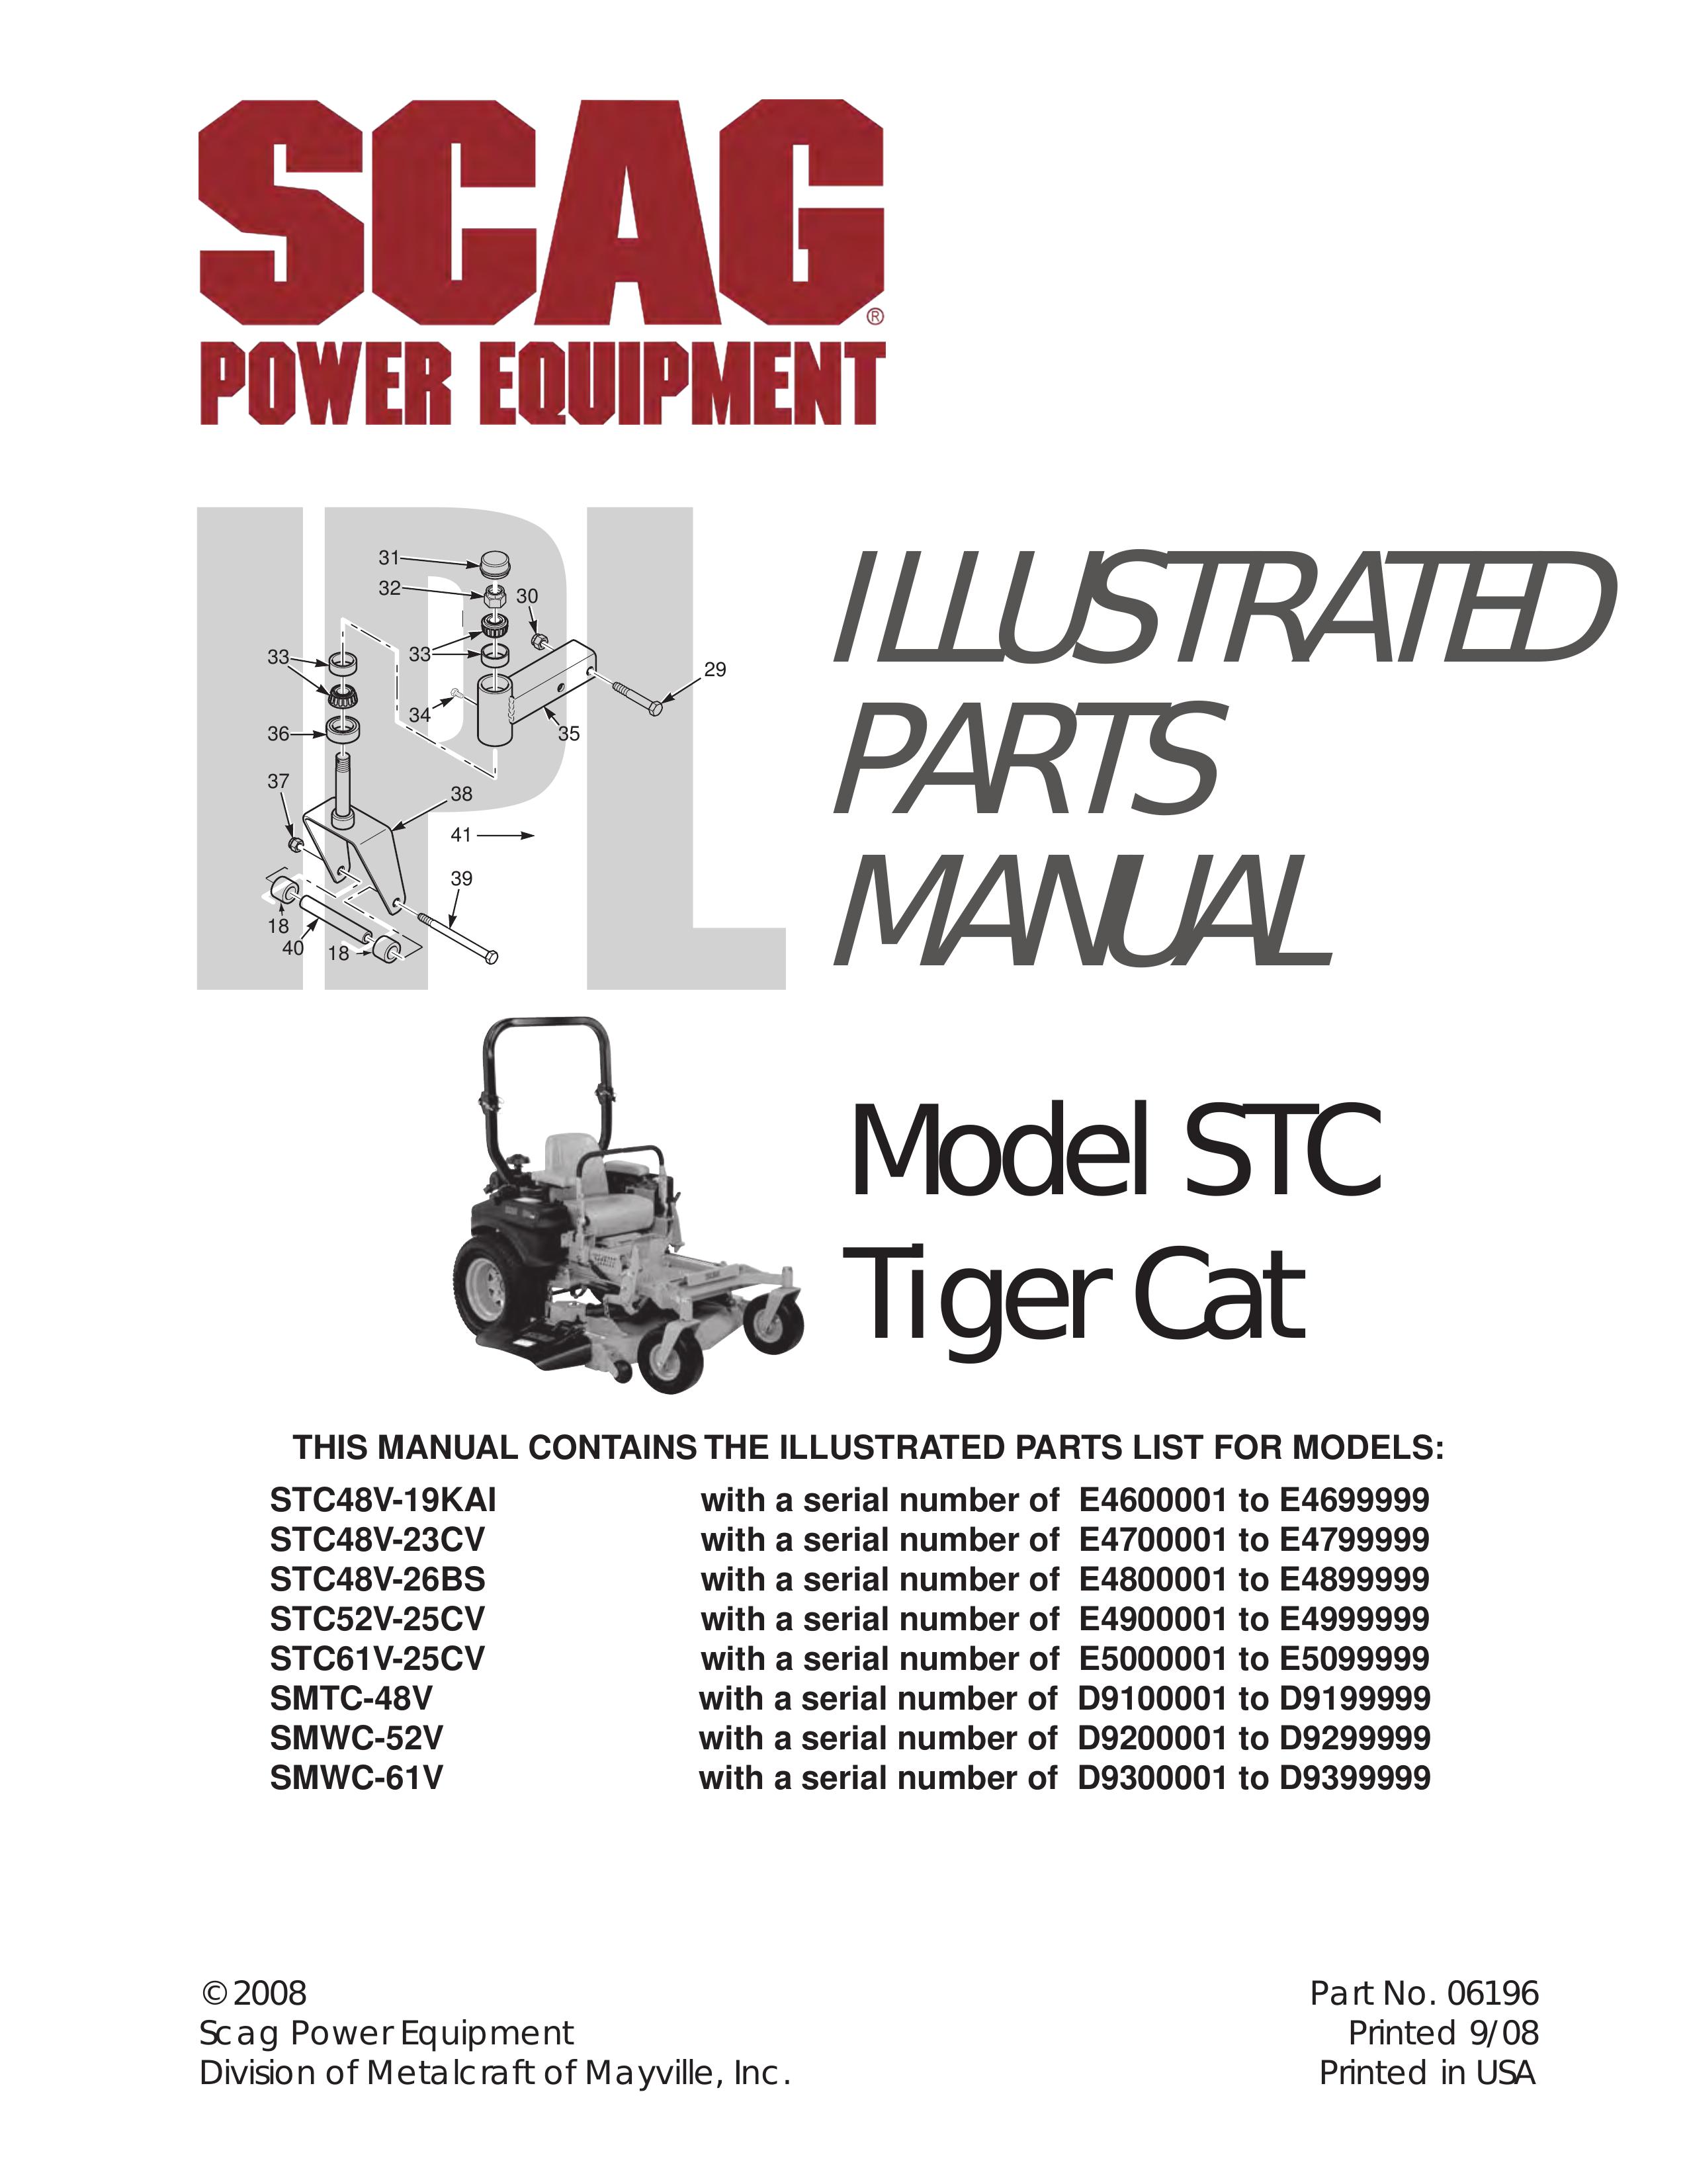 Scag Power Equipment SMWC-52V Lawn Mower User Manual